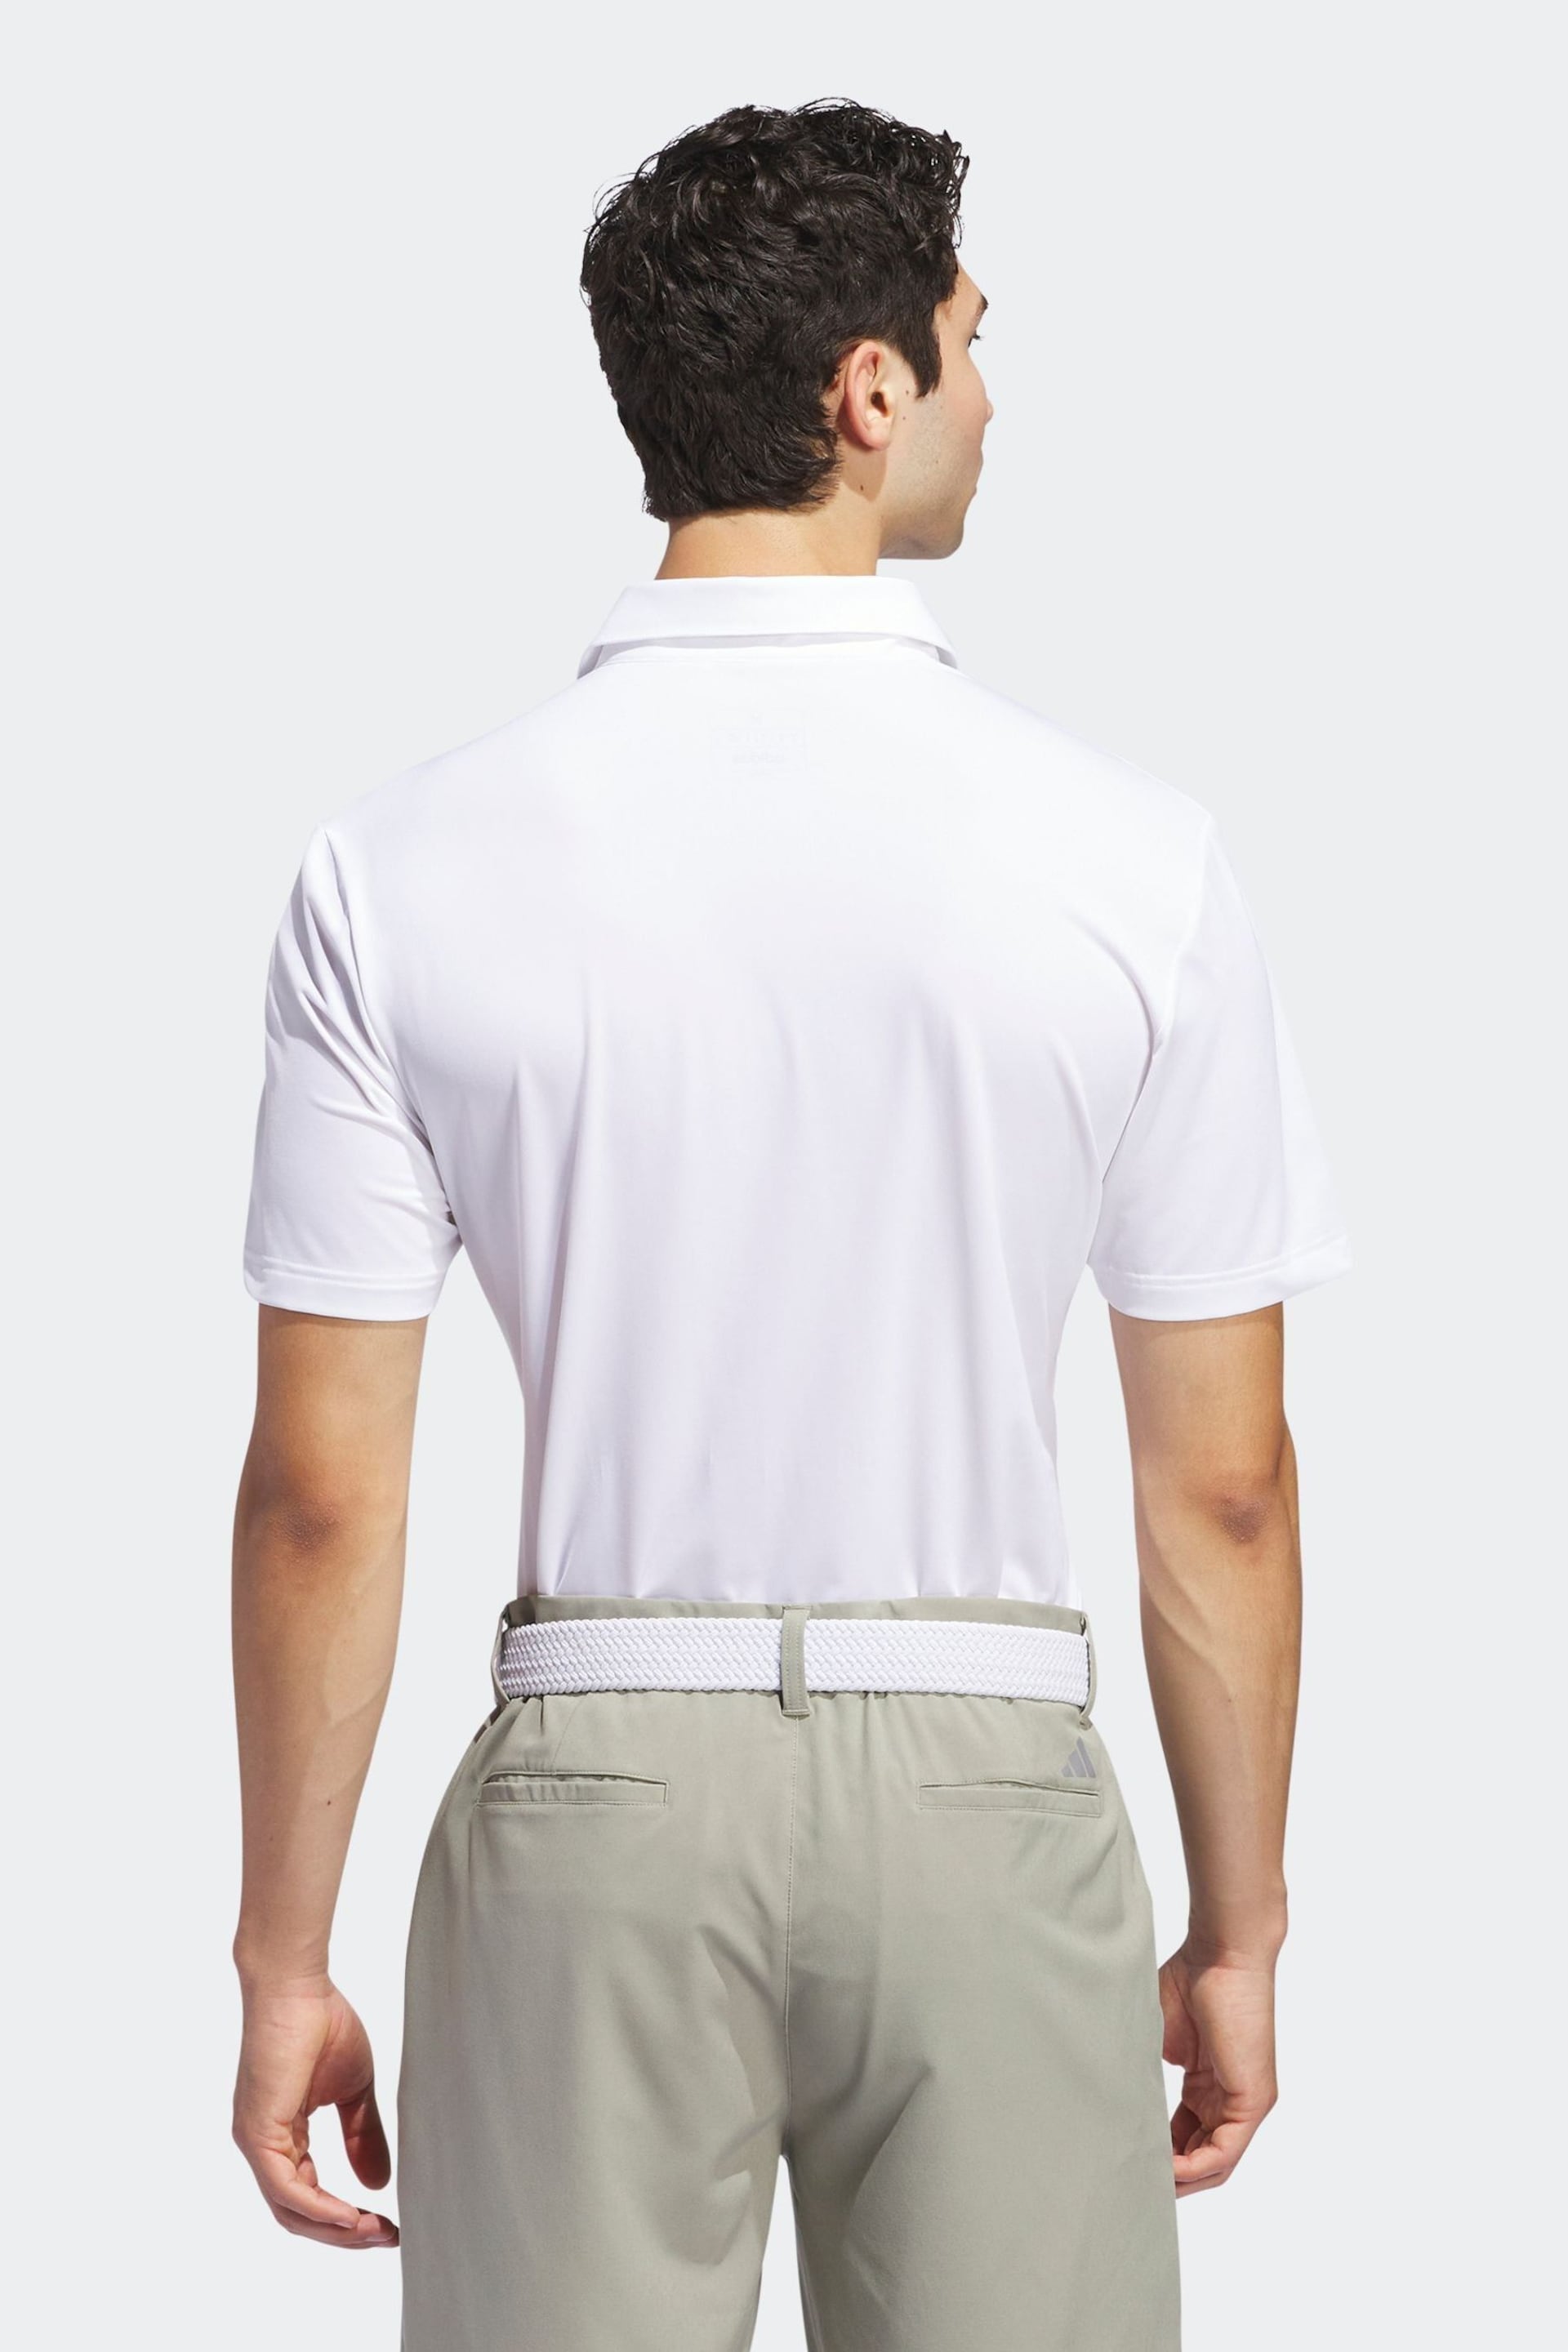 adidas Golf Ultimate365 Solid Polo Shirt - Image 3 of 8